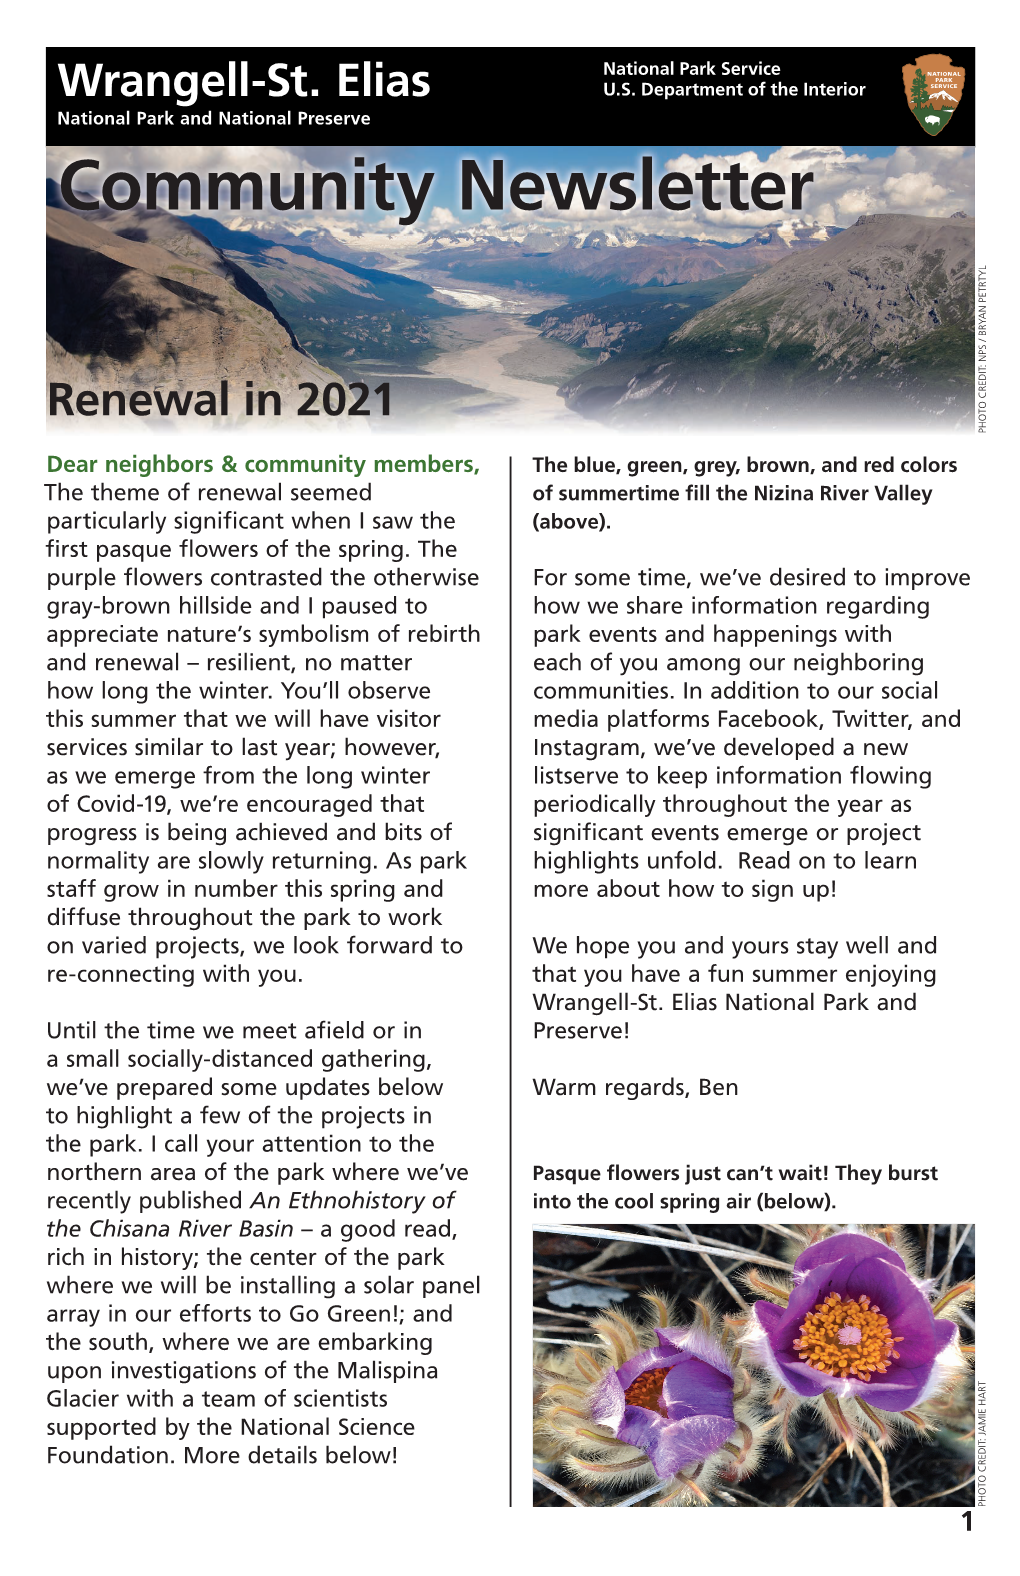 Wrangell St. Elias Community Newsletter 2021